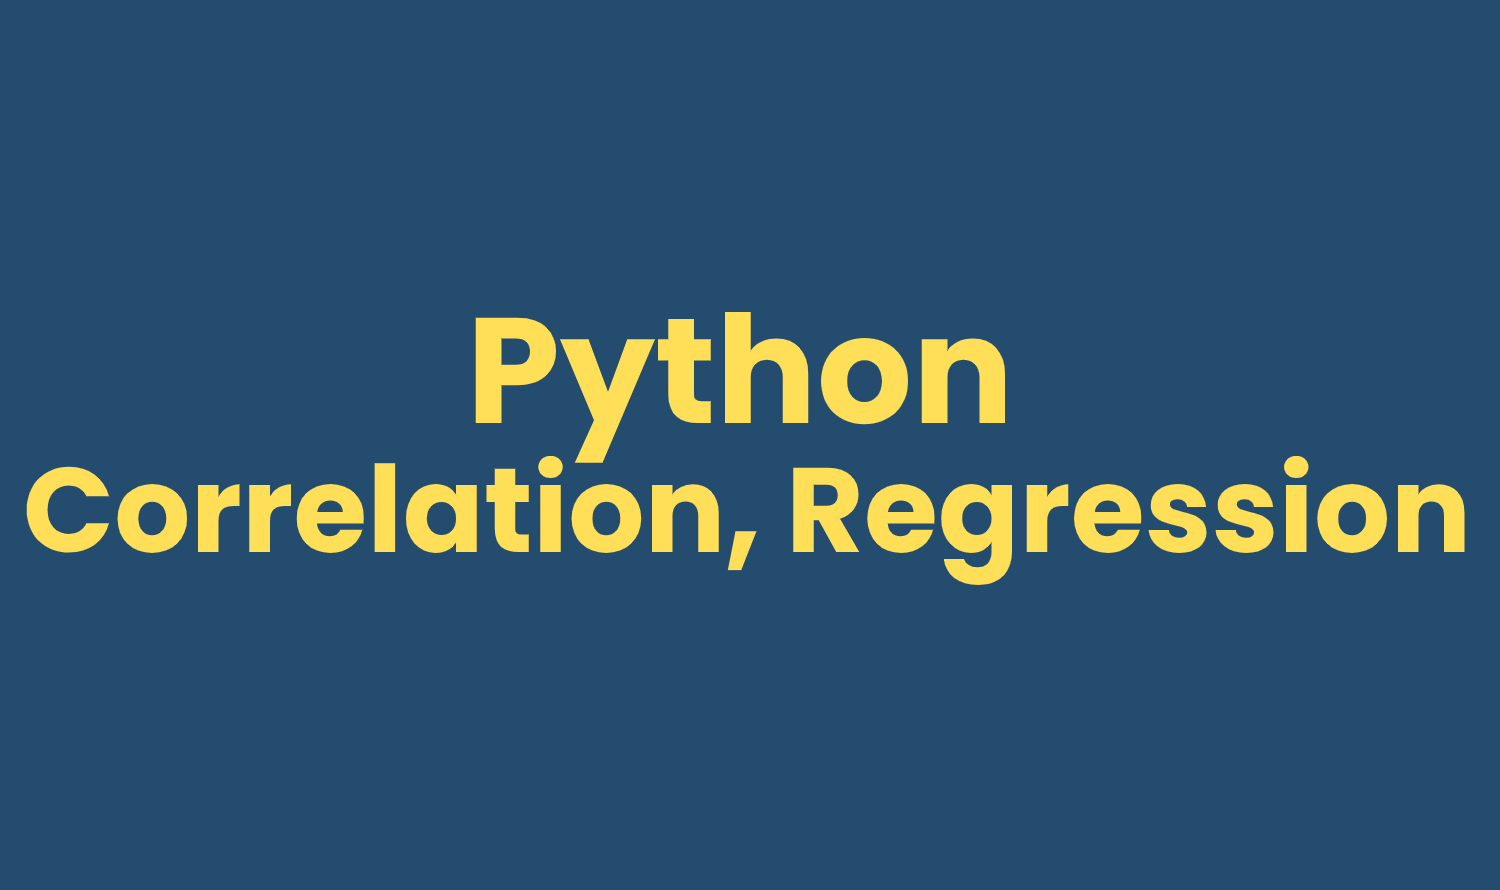 Python correlation and regression